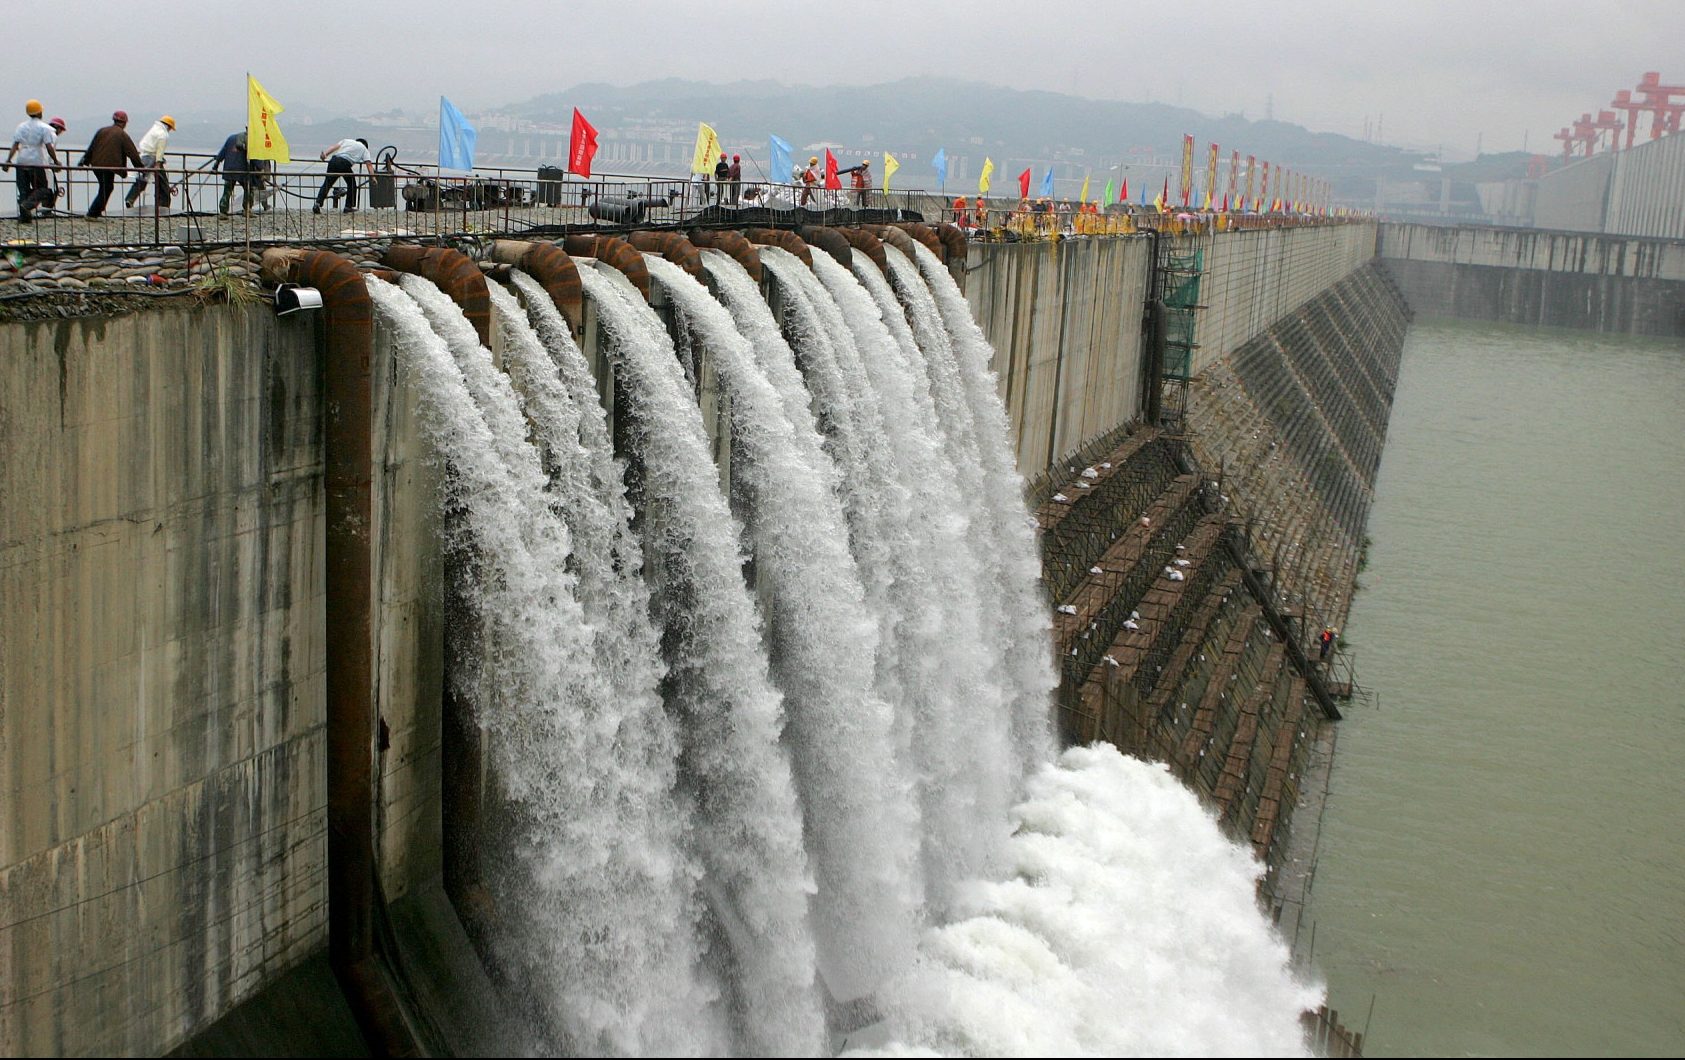 three gorges dam case study worksheet answers